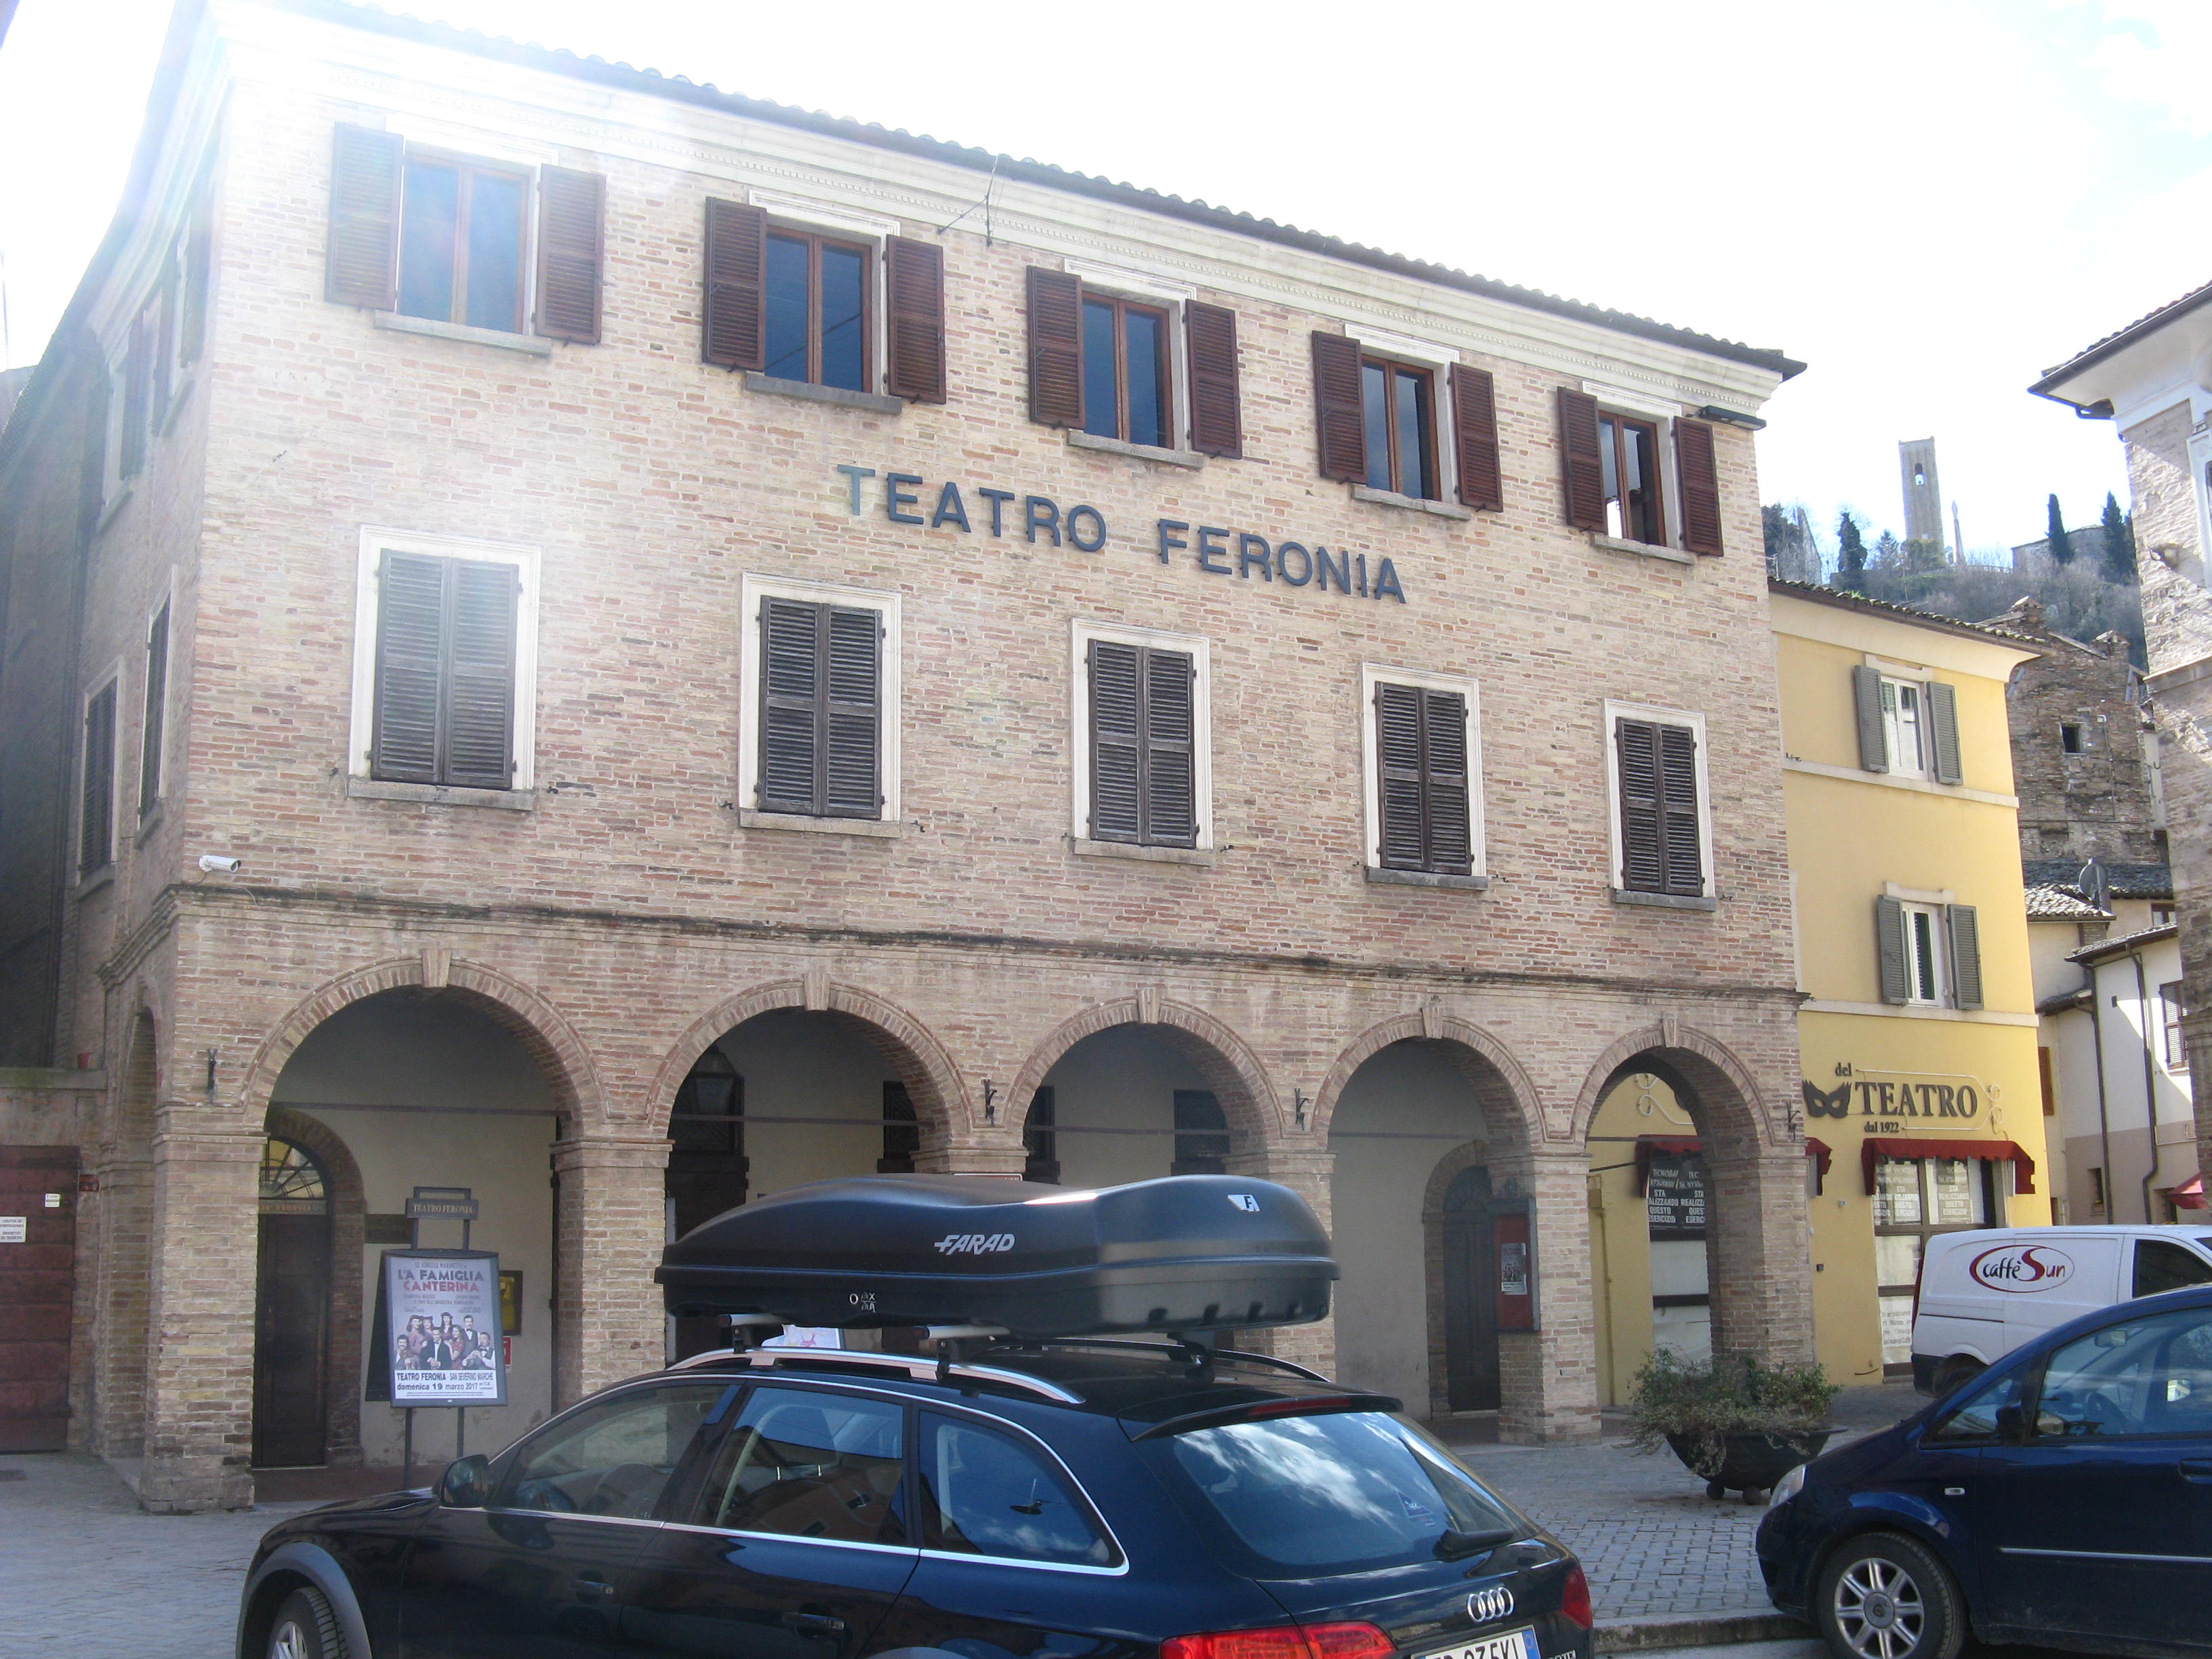 Teatro Feronia (Teatro) - San Severino Marche (MC) 